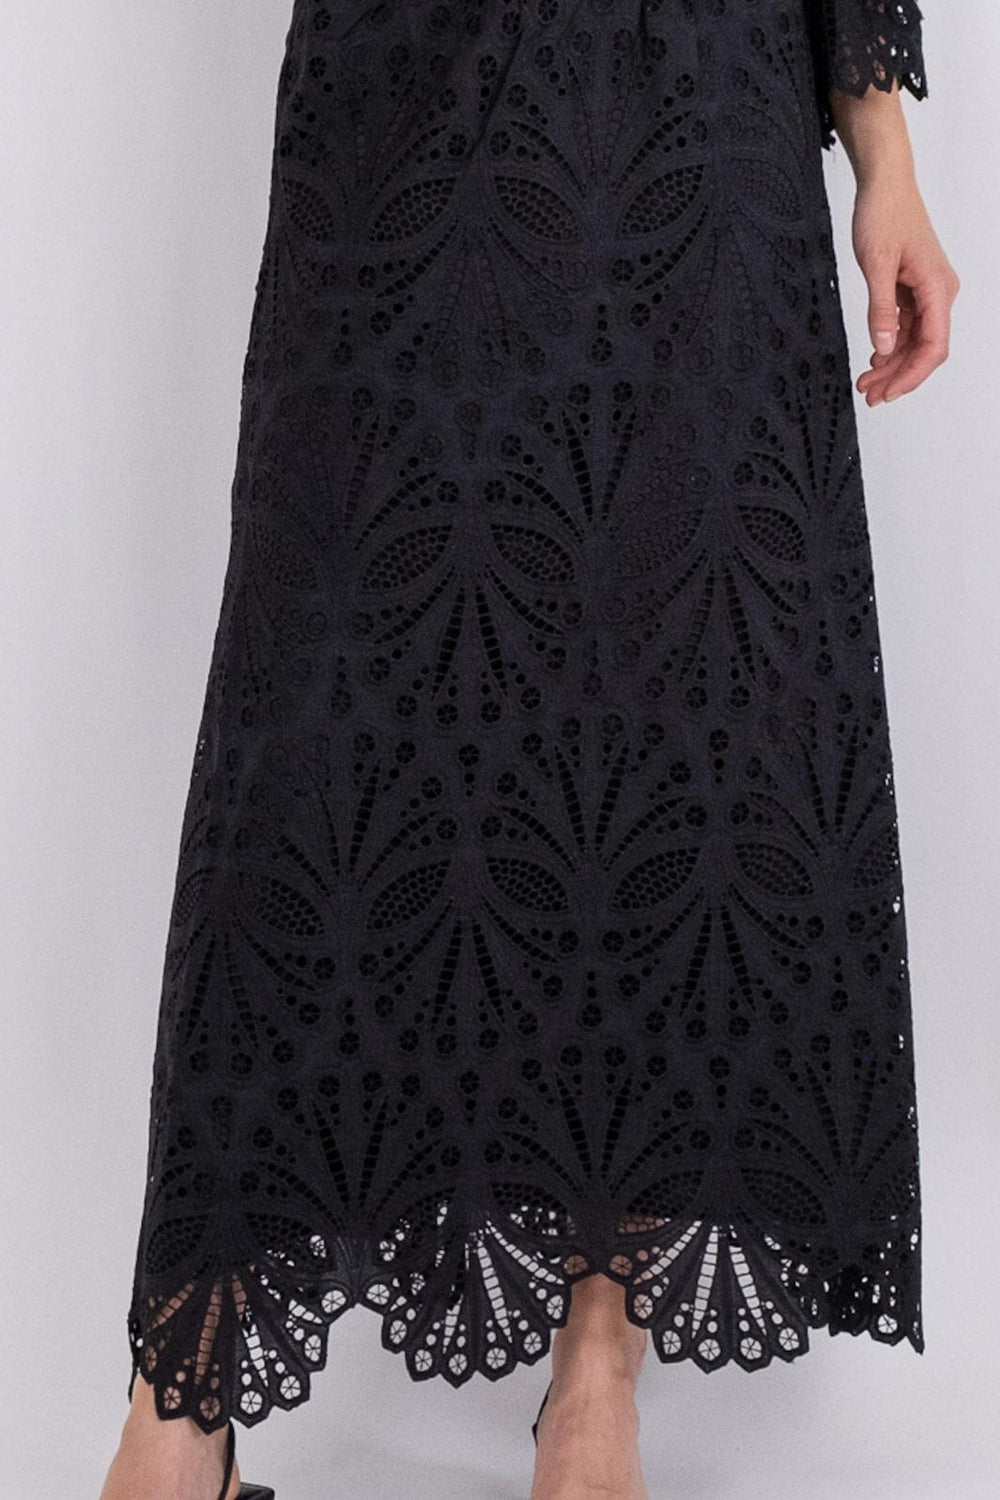 Neo Noir - Daia Embroidery Skirt - Black 